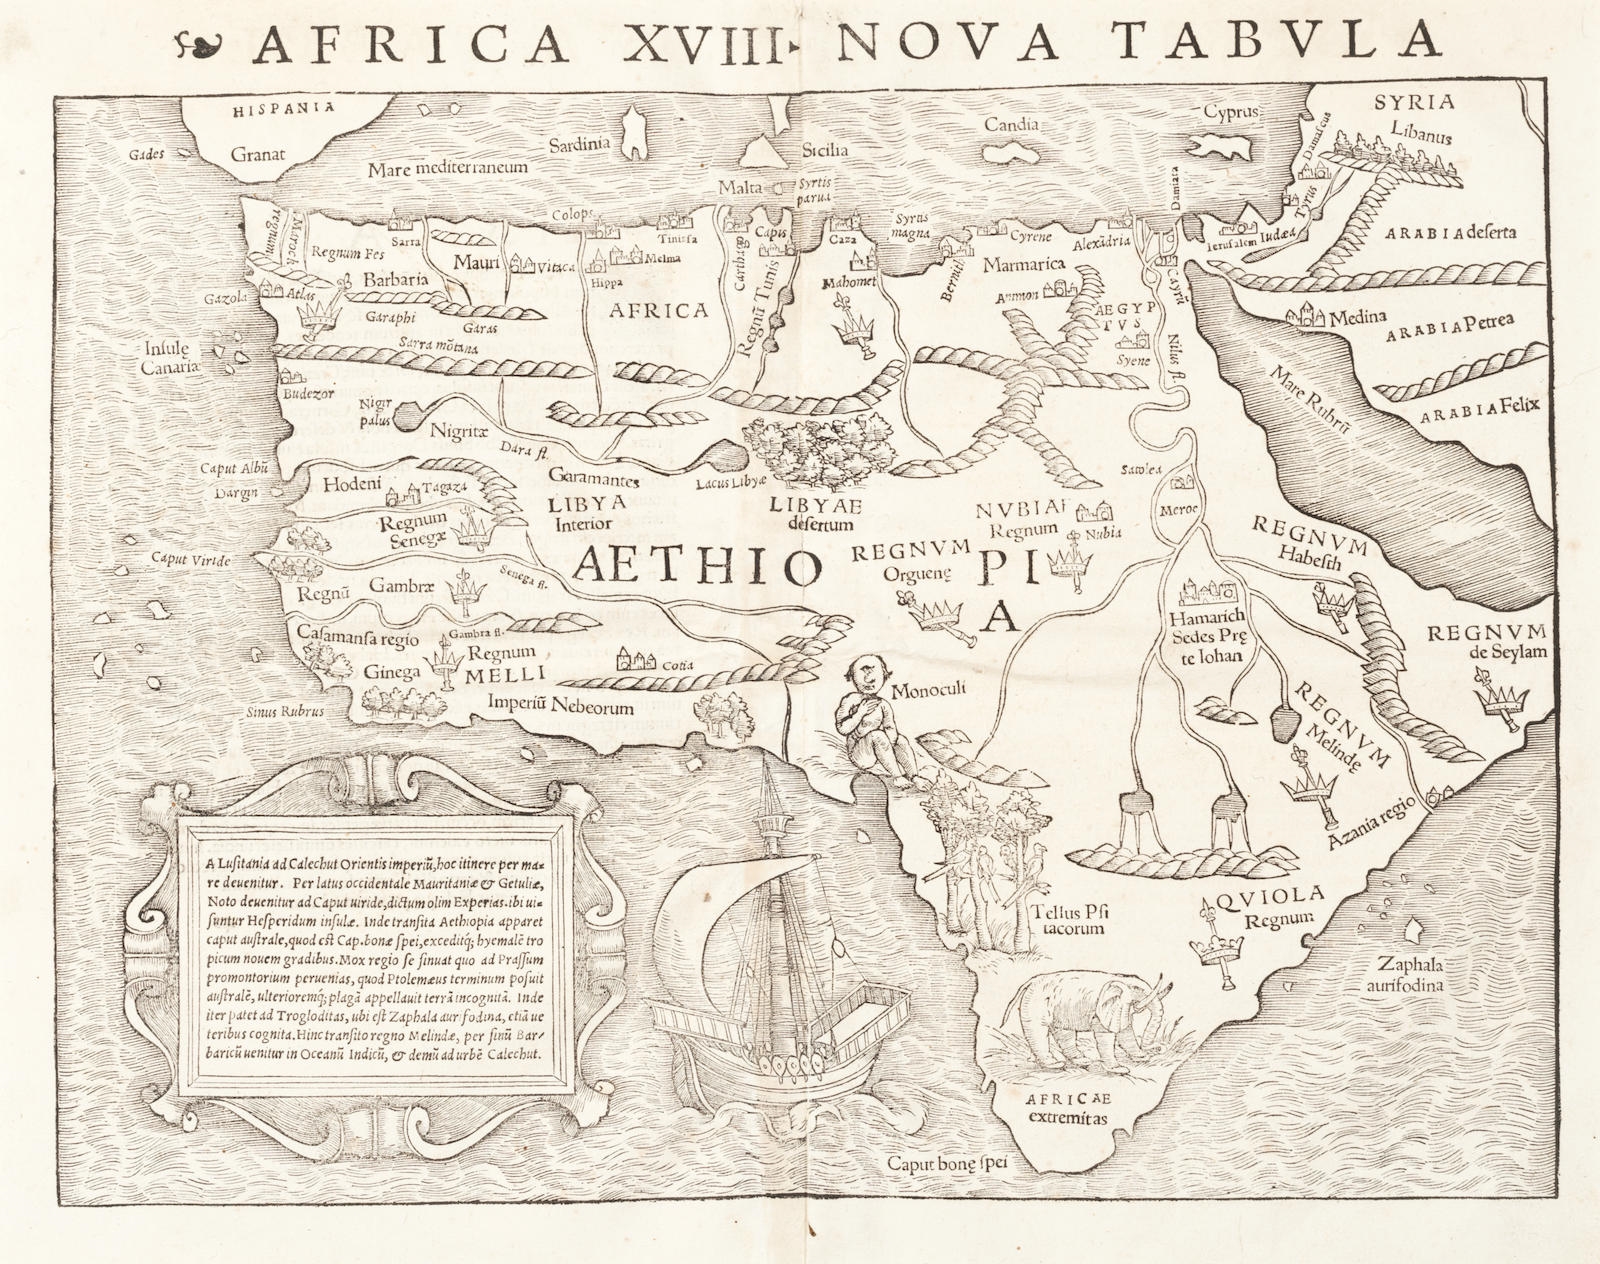 Africa XVIII. Nova tabula by Sebastian Münster, circa1545-1550